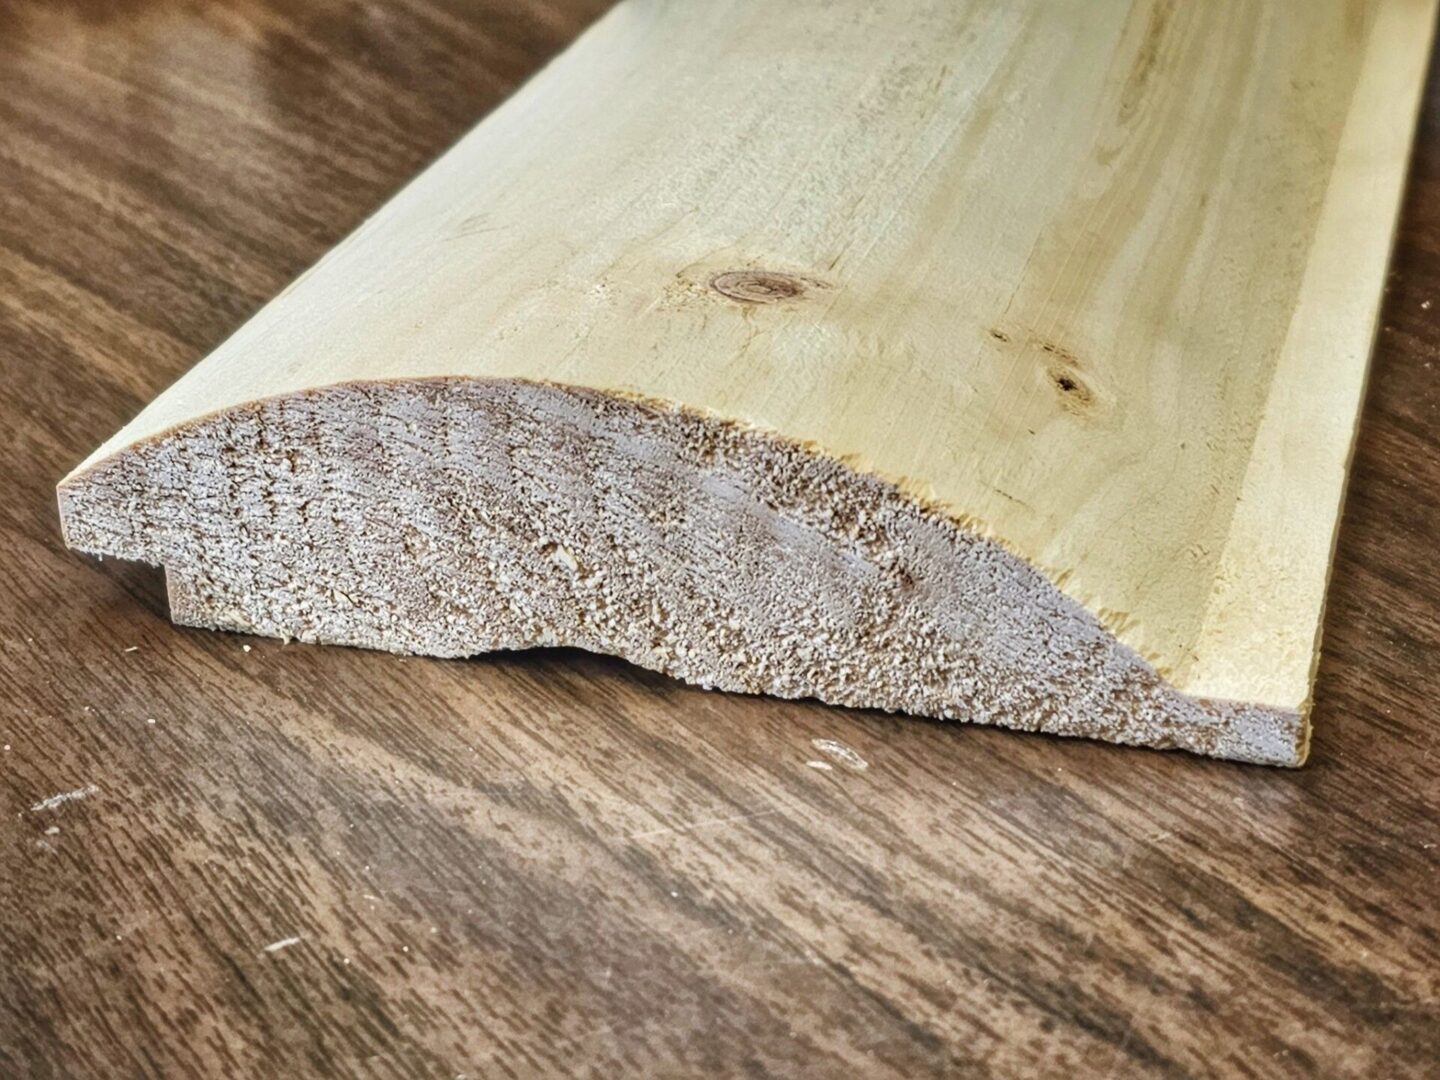 A closeup look of a wood piece kept on a wooden floor